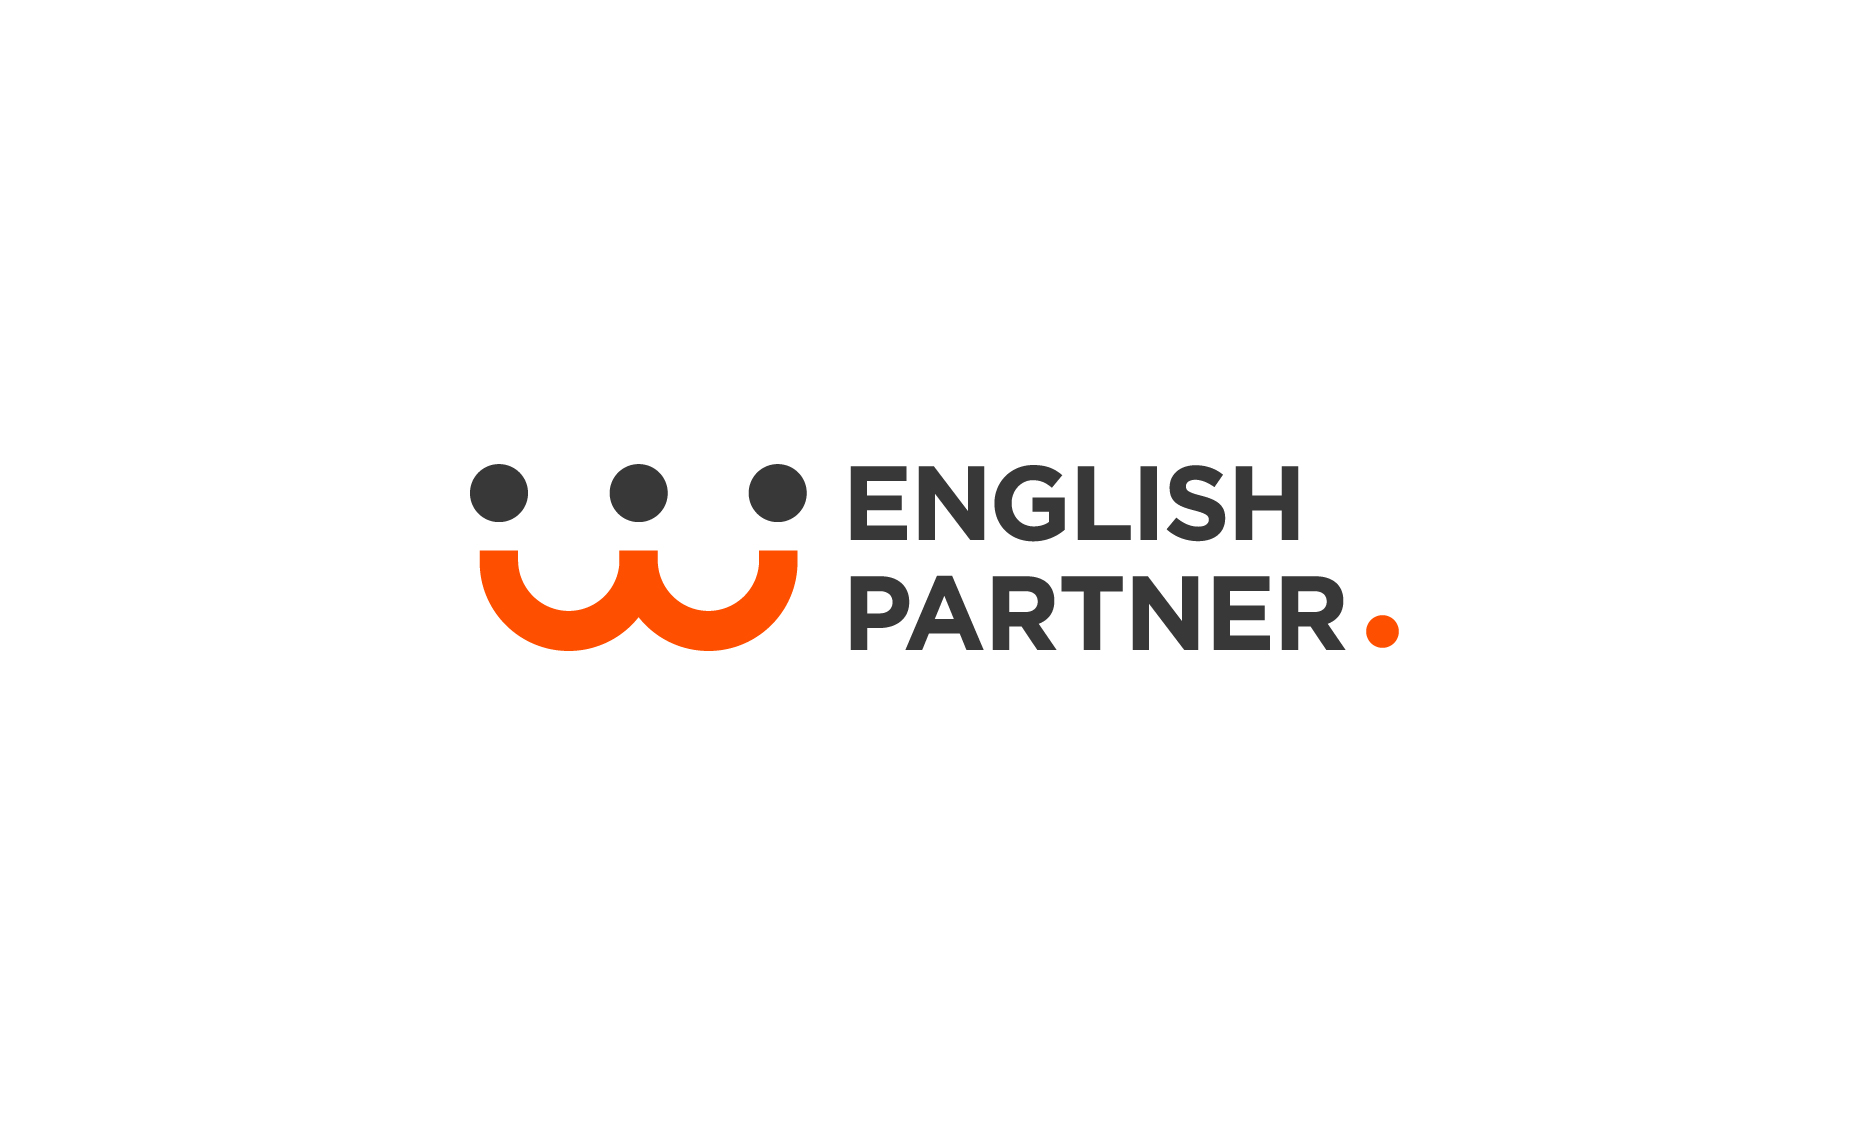 Partner Education Brand Identity Design Created by Bing N Design